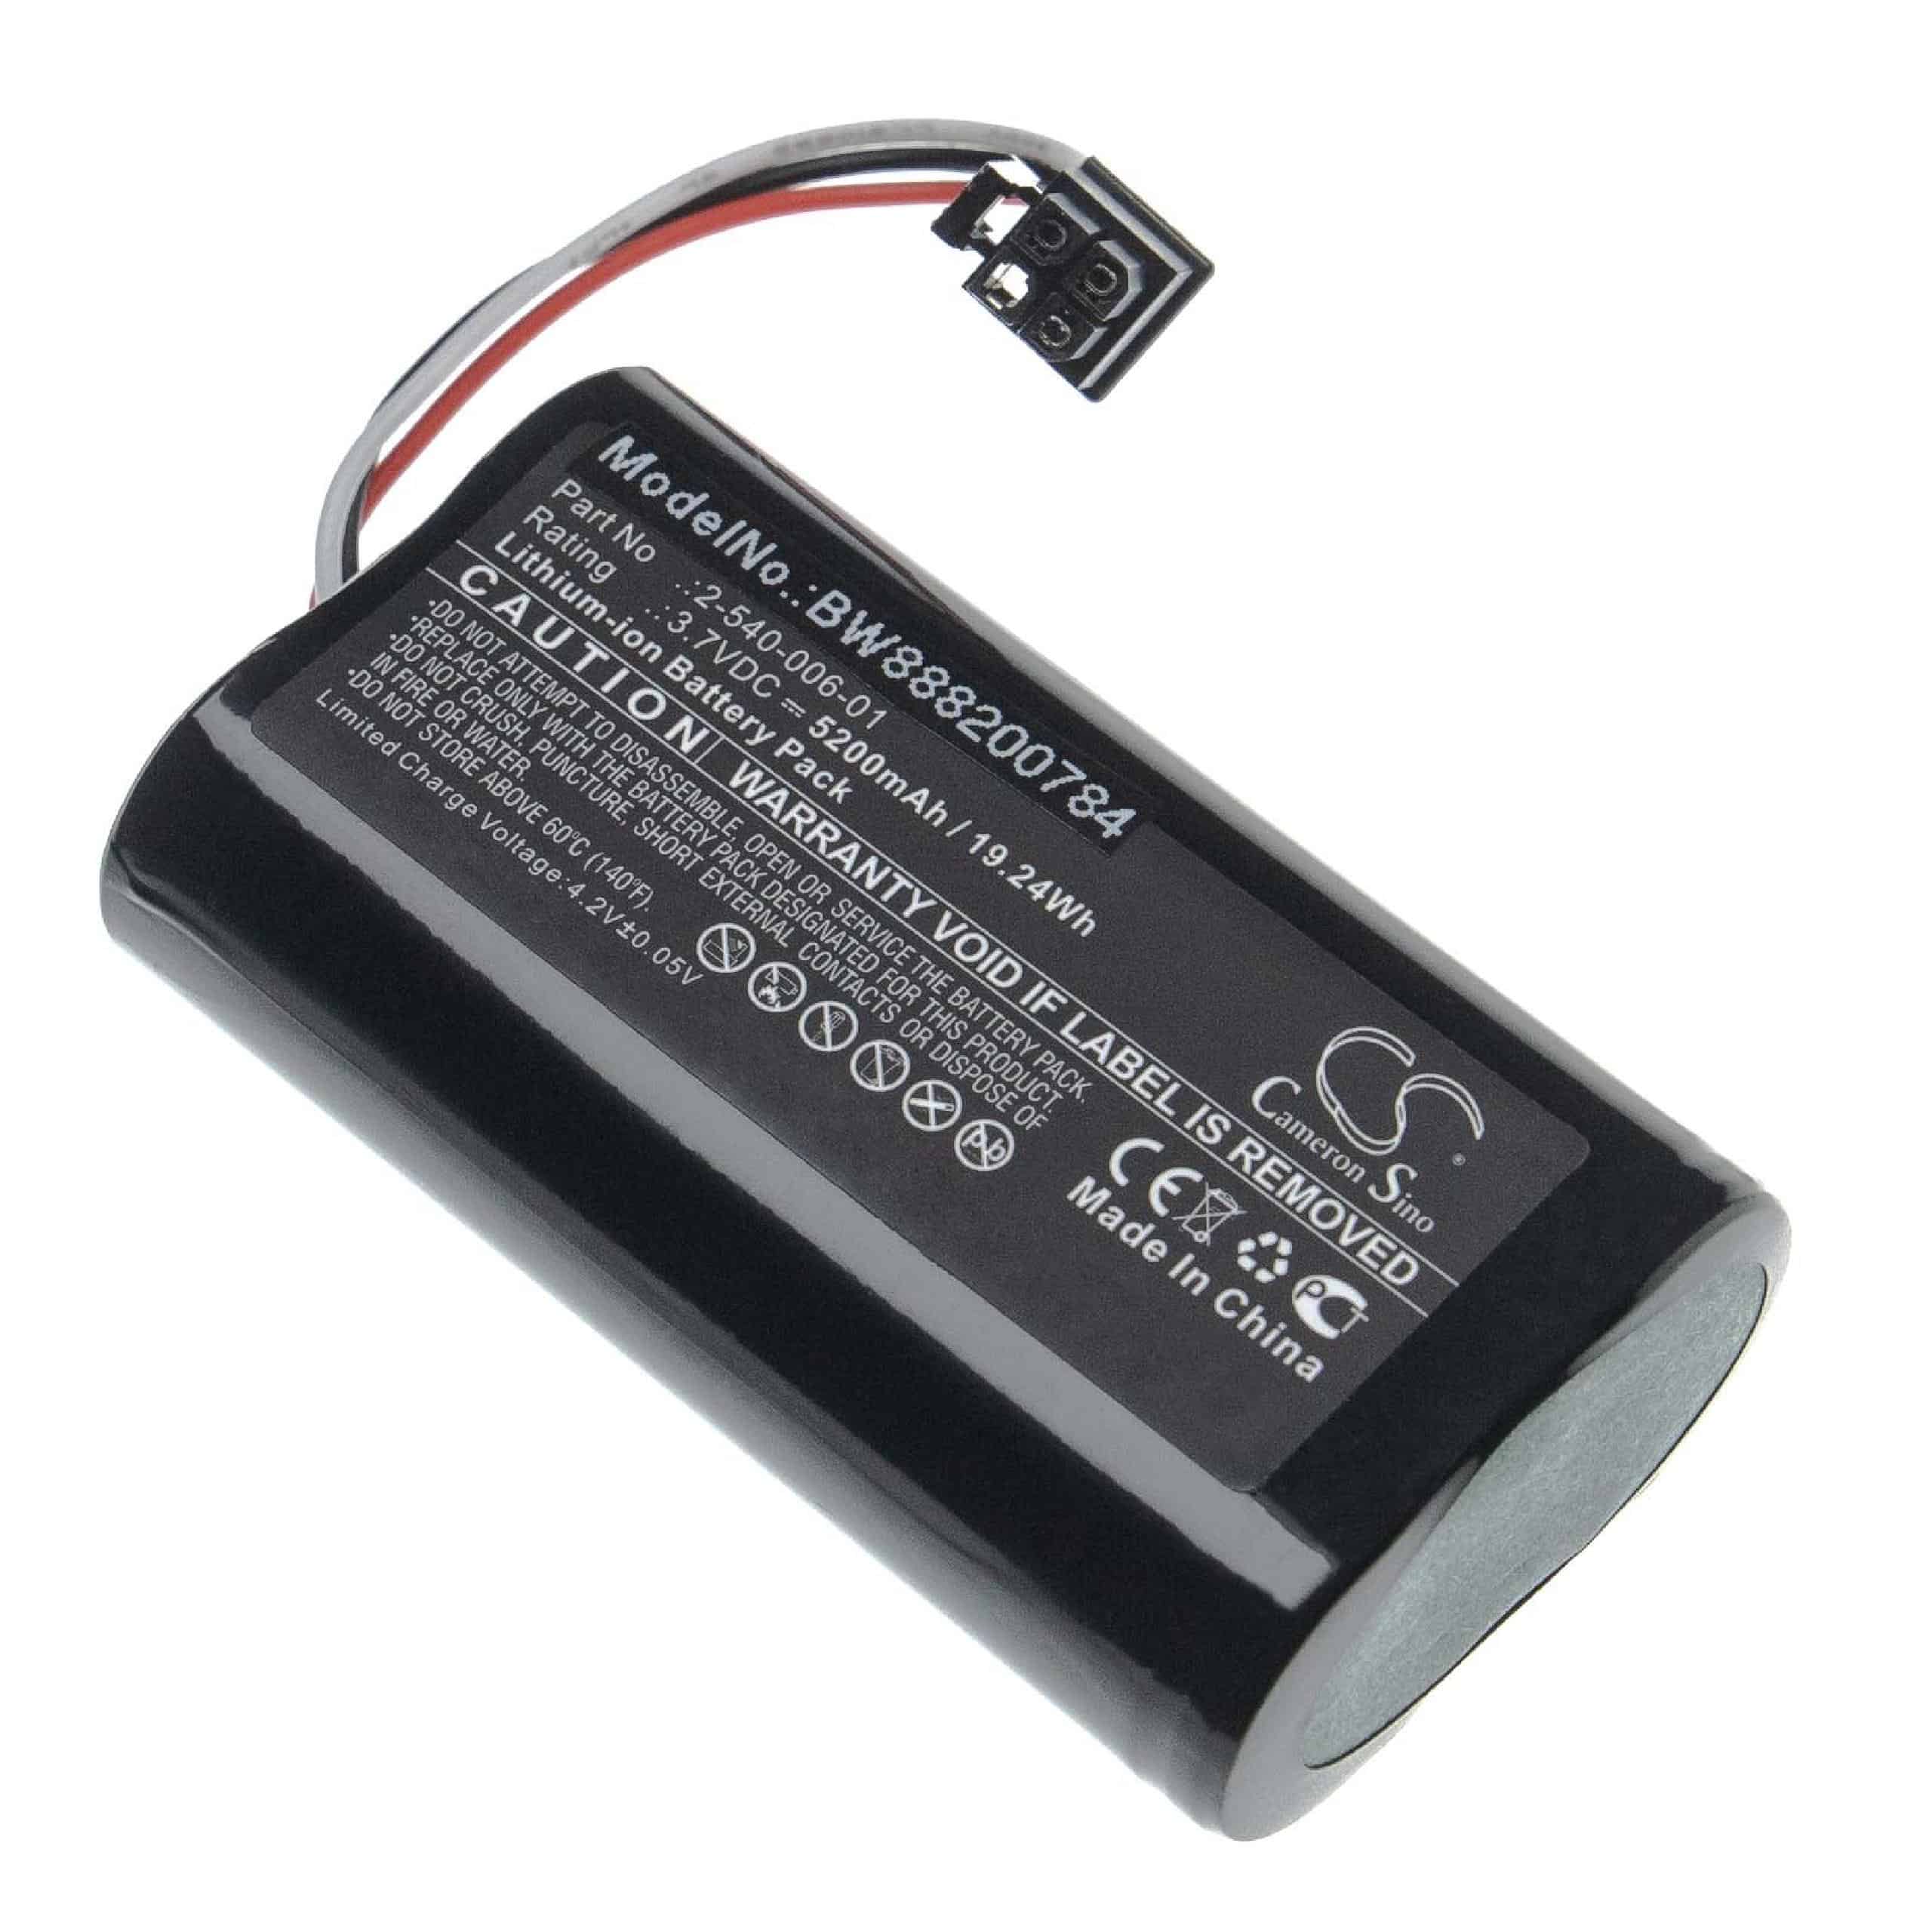  Battery replaces Soundcast 2-540-006-01 for SoundcastLoudspeaker - Li-Ion 5200 mAh